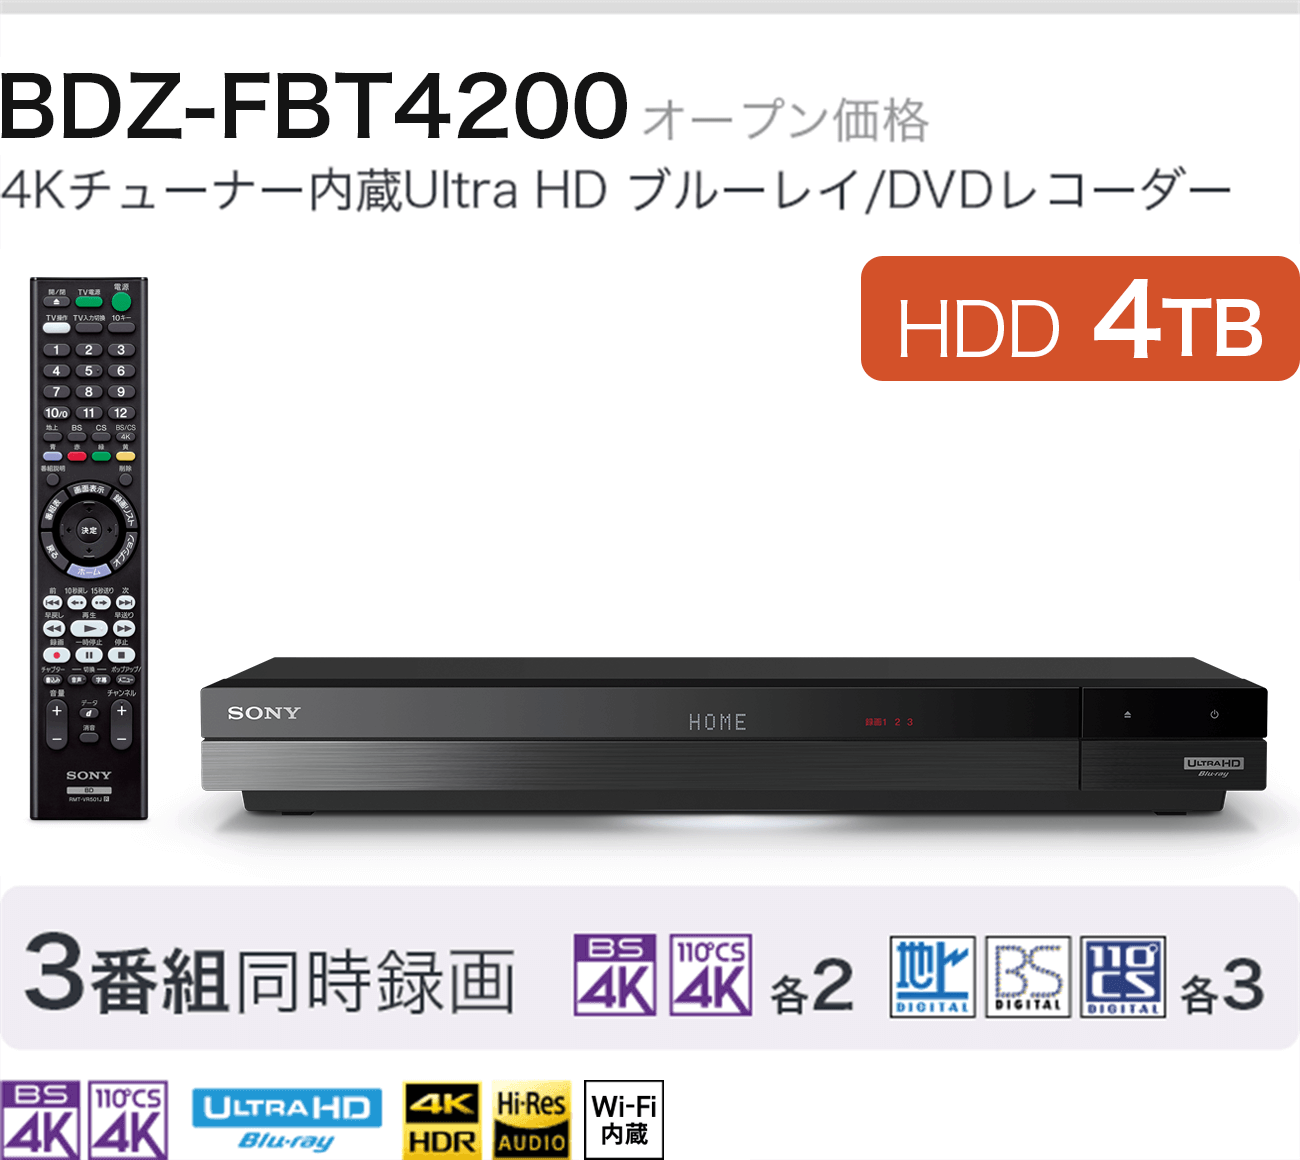 BDZ-FBT4200 オープン価格 4Kチューナー内蔵Ultra HD ブルーレイ/DVDレコーダー HDD 4TB 3番組同時録画